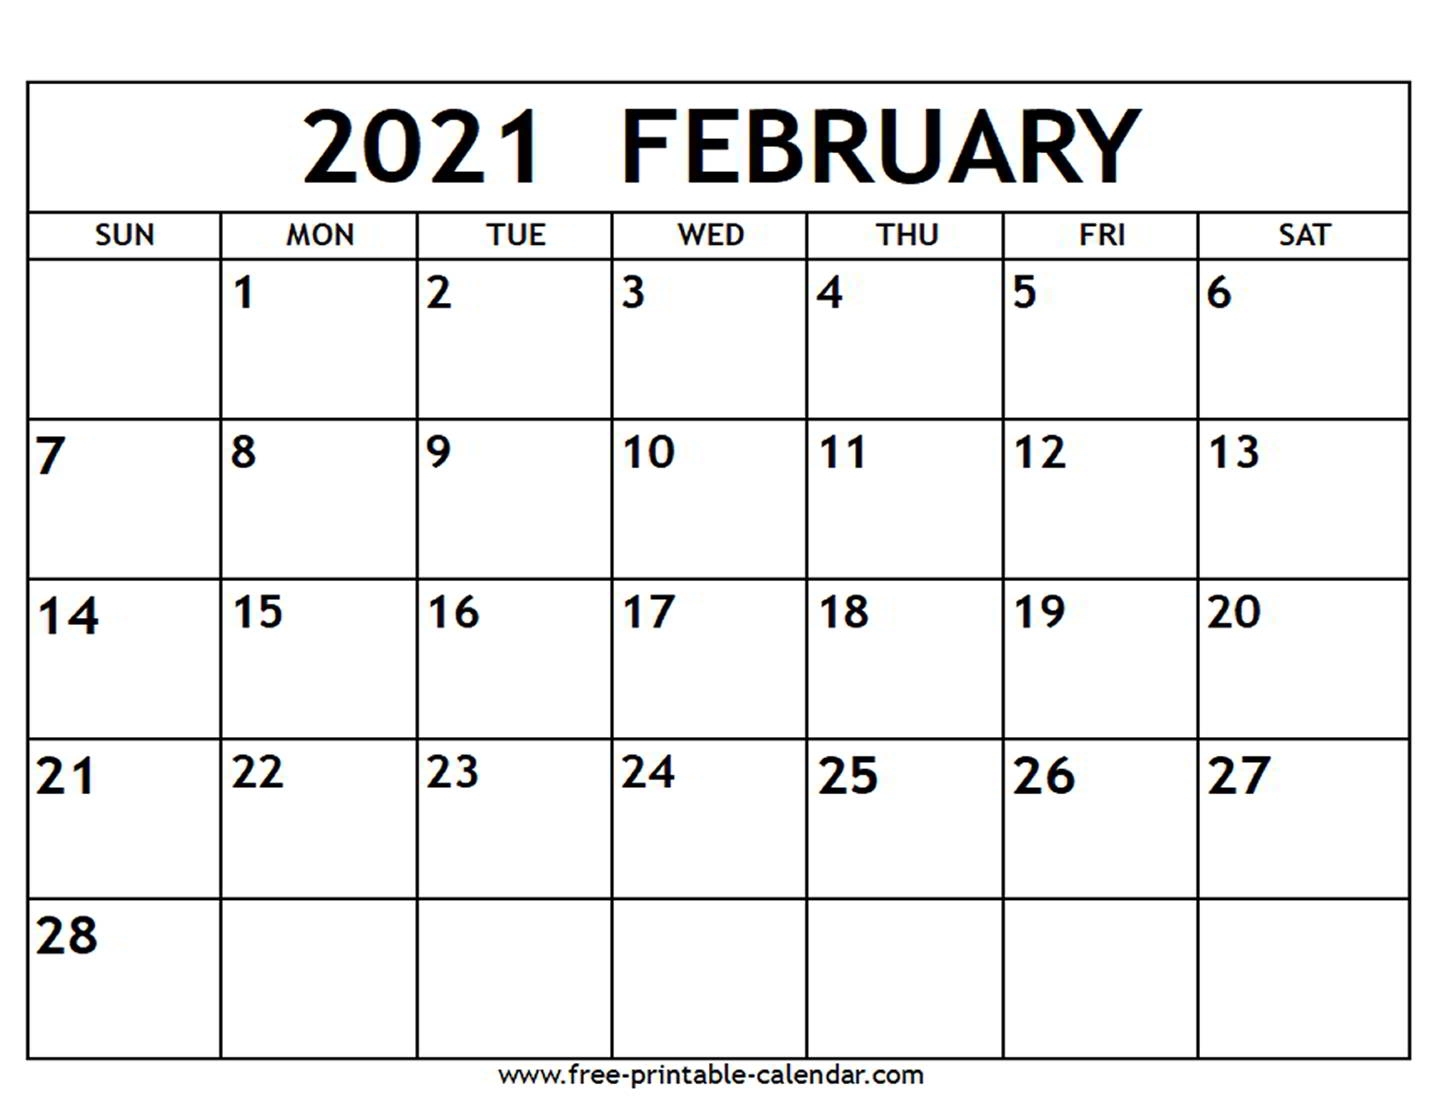 Get 2021 Printable Calendar Free